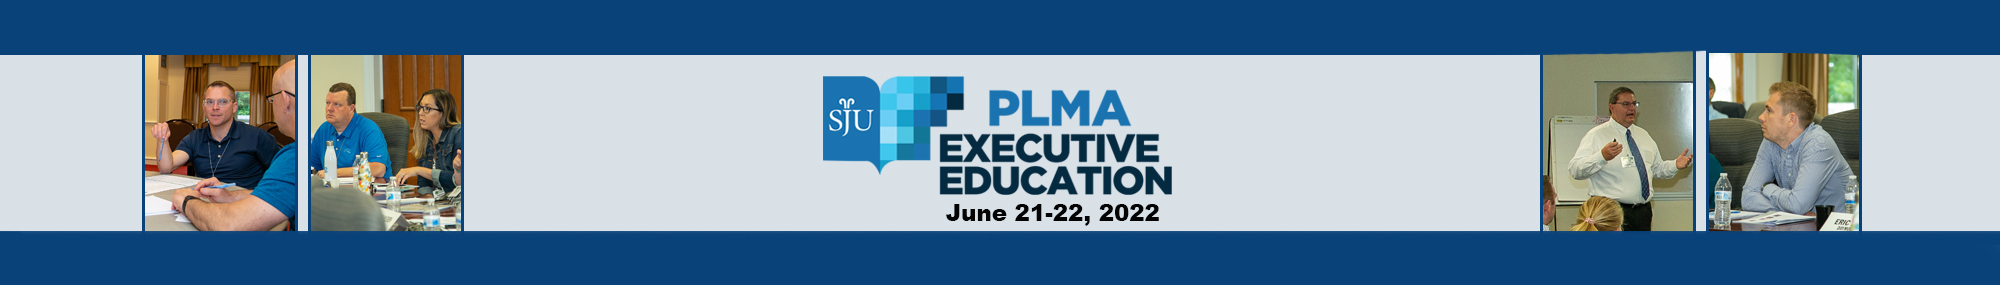 https://plma.com/events/plmas-2022-executive-education-program/register